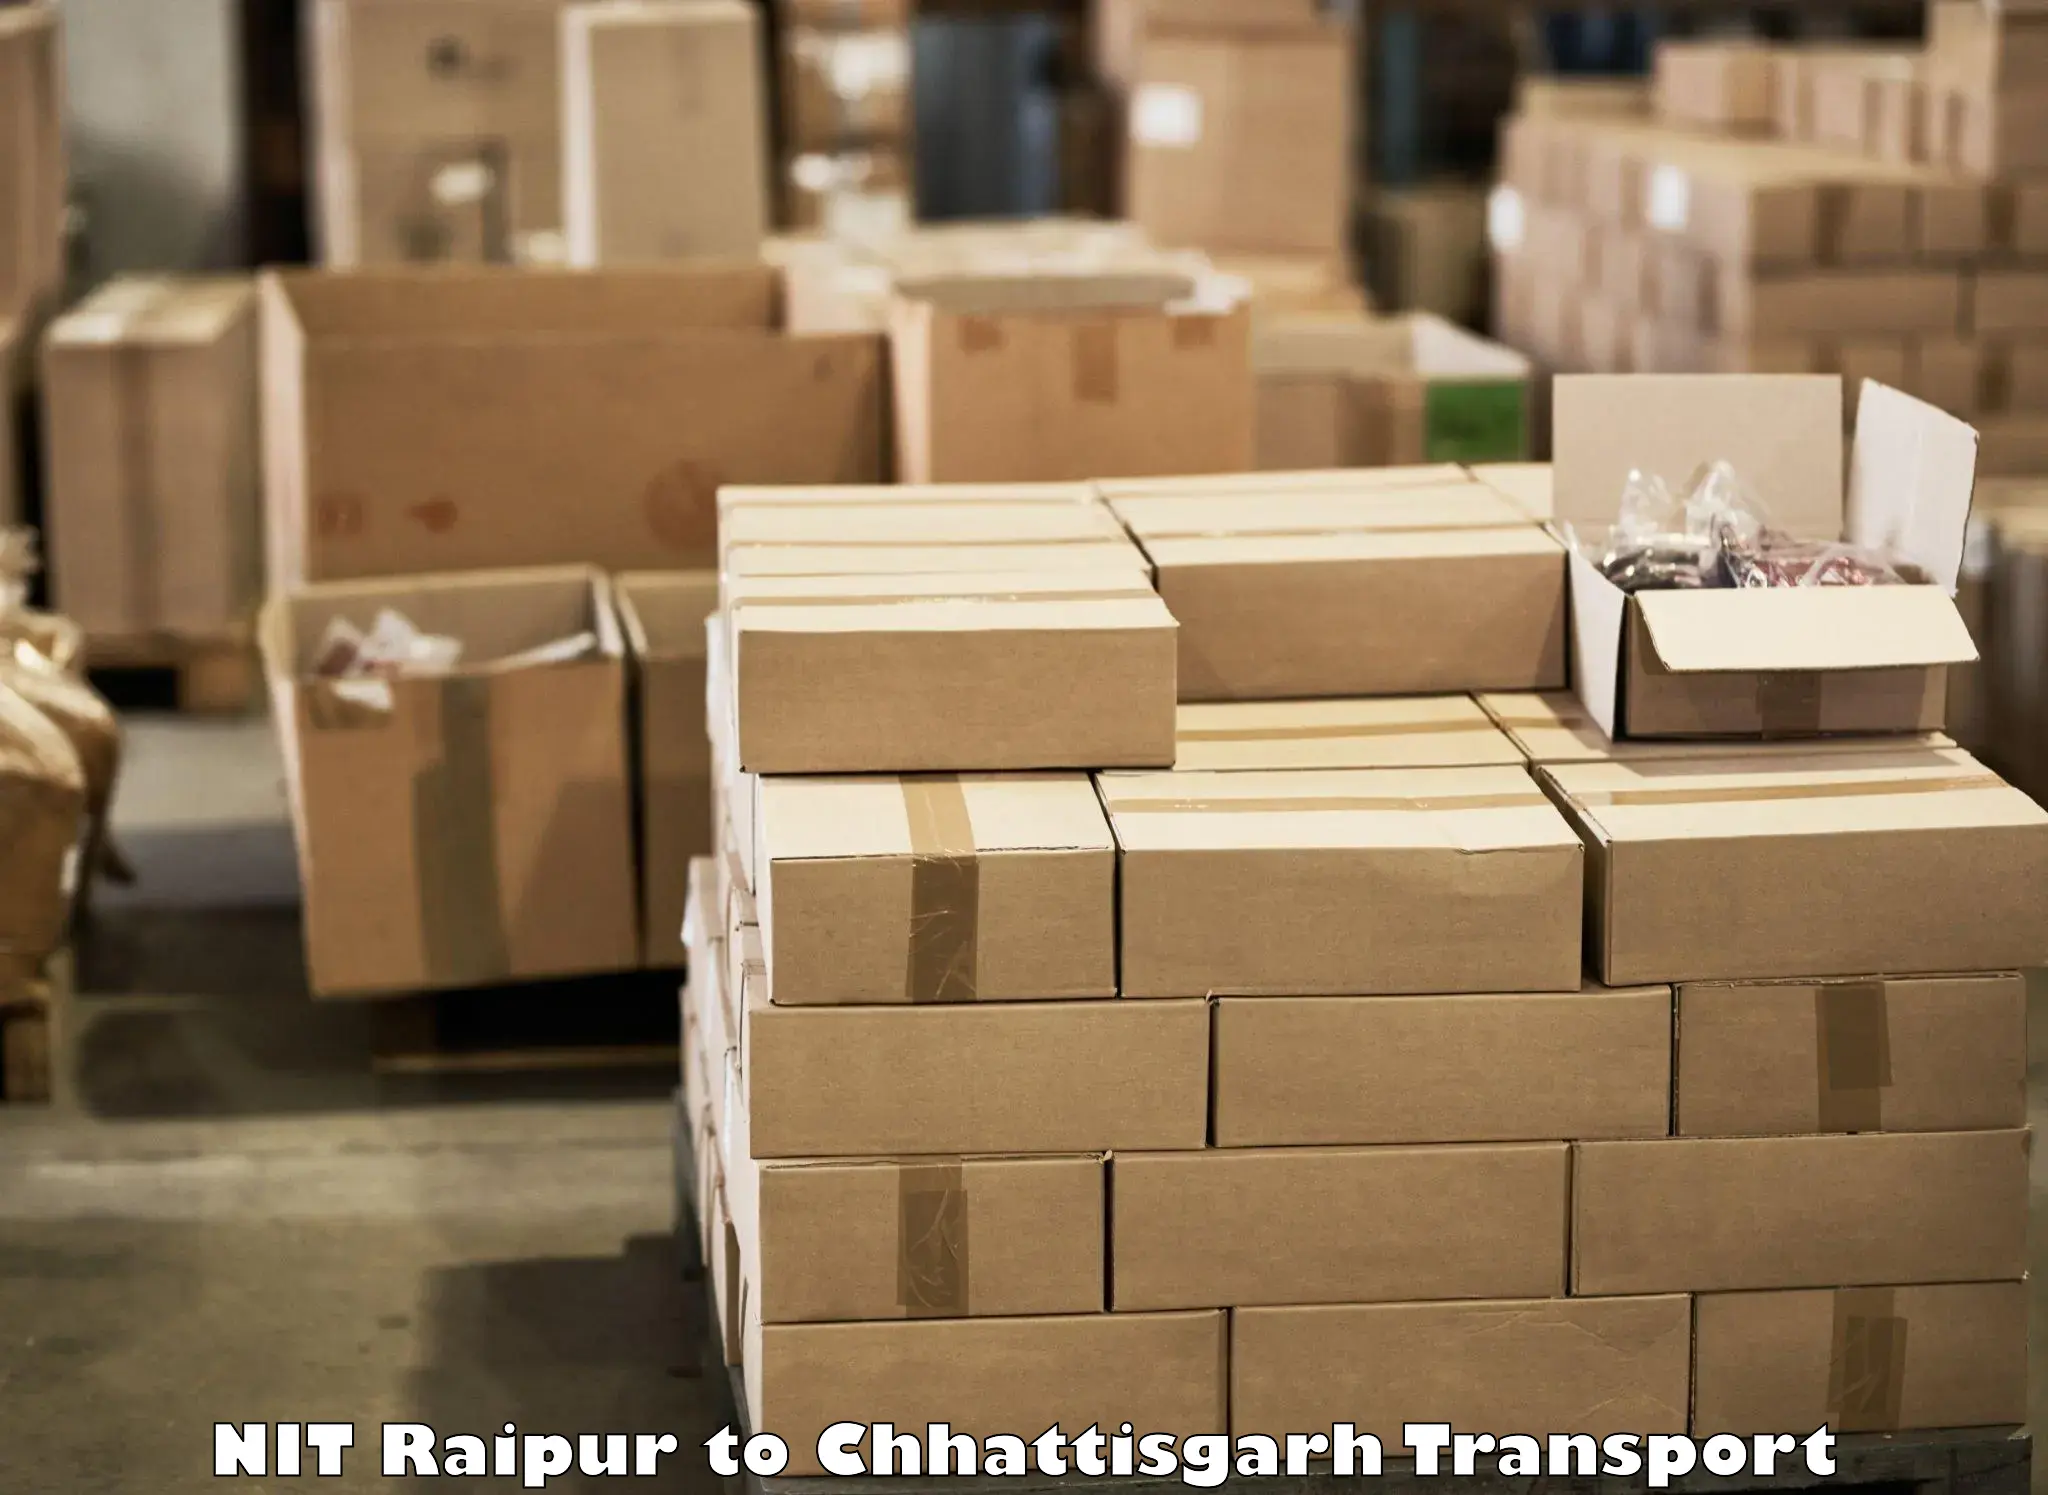 Vehicle transport services NIT Raipur to Chhattisgarh